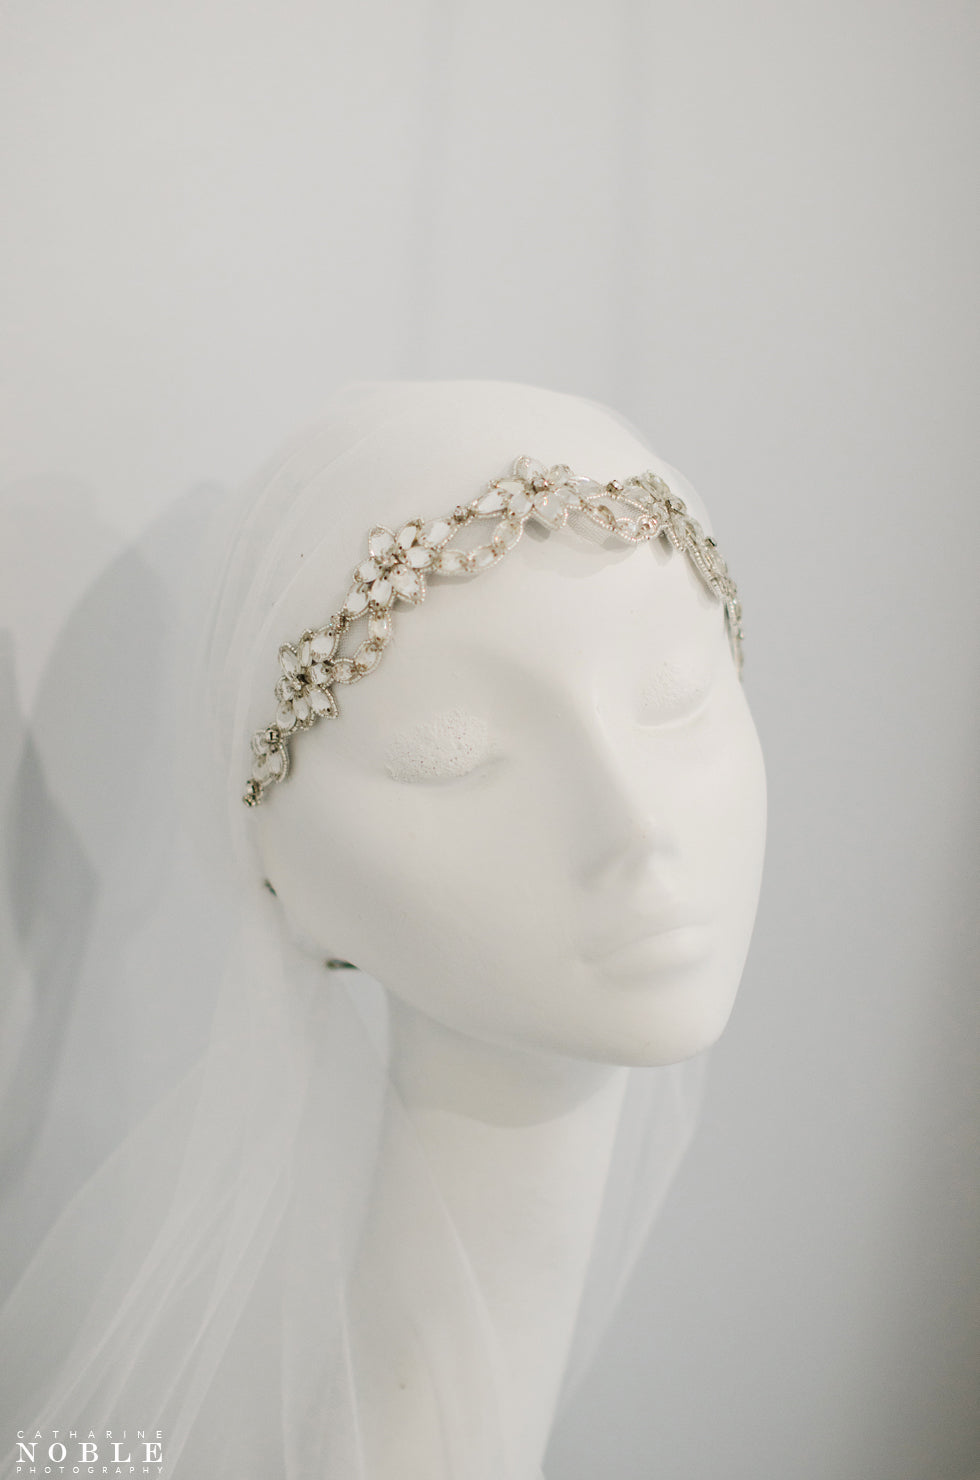 Juliet cap wedding veil. Photo: Catharine Noble